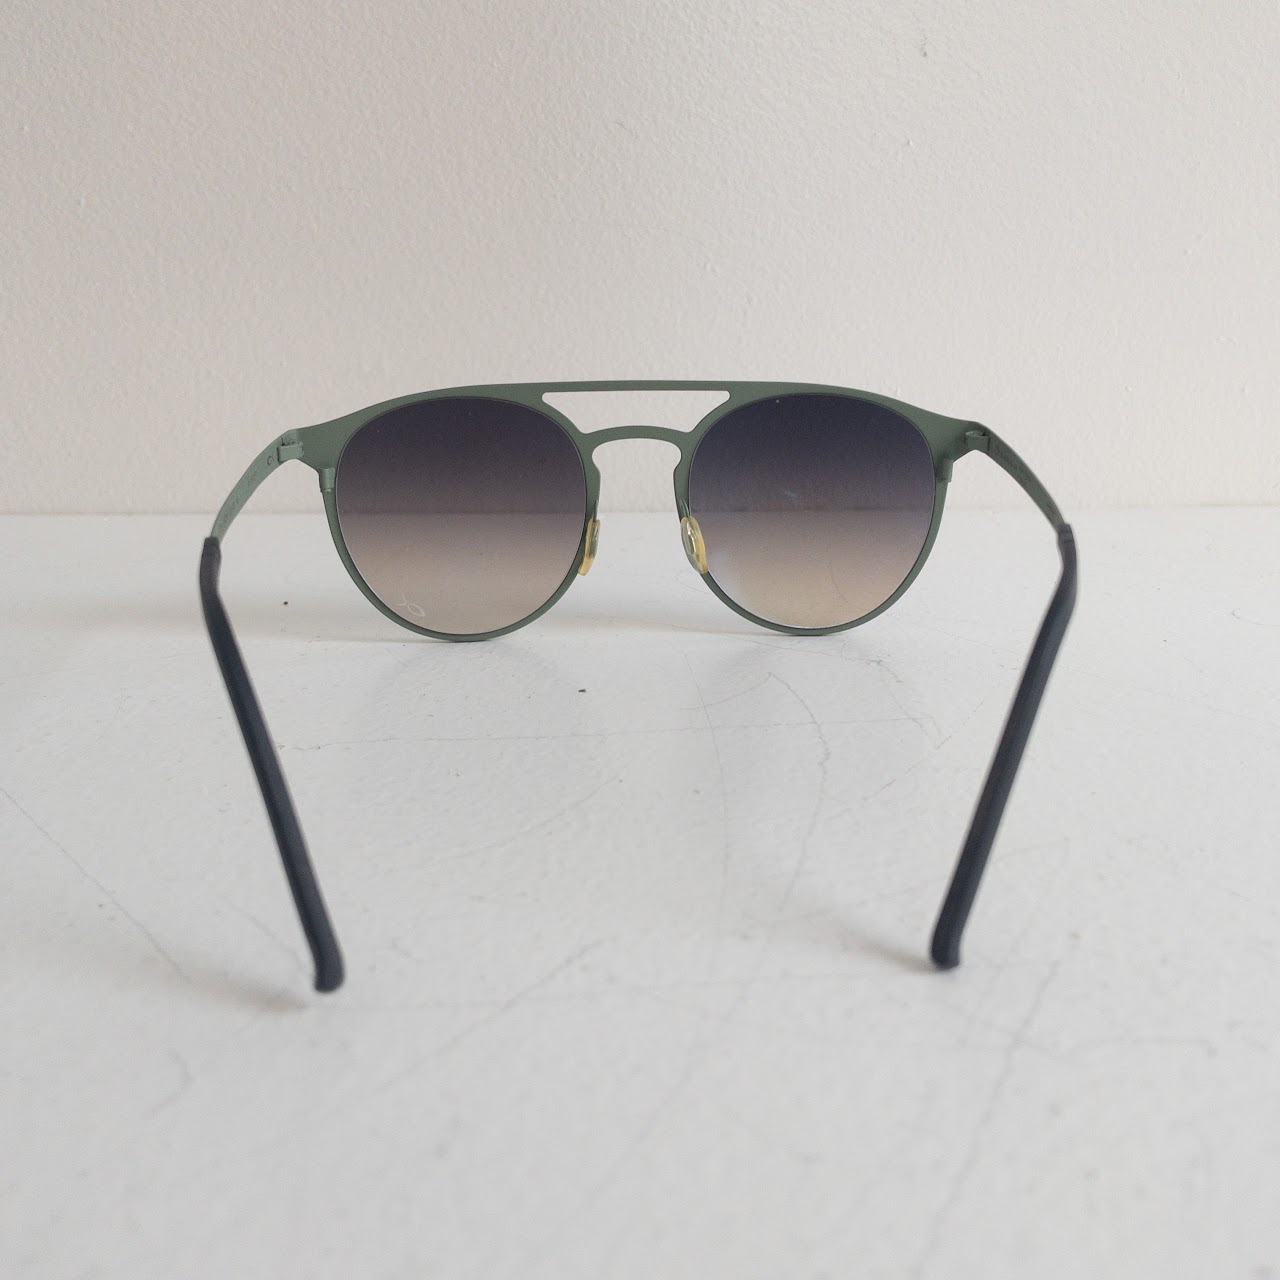 Blackfin 'Weston' Sunglasses